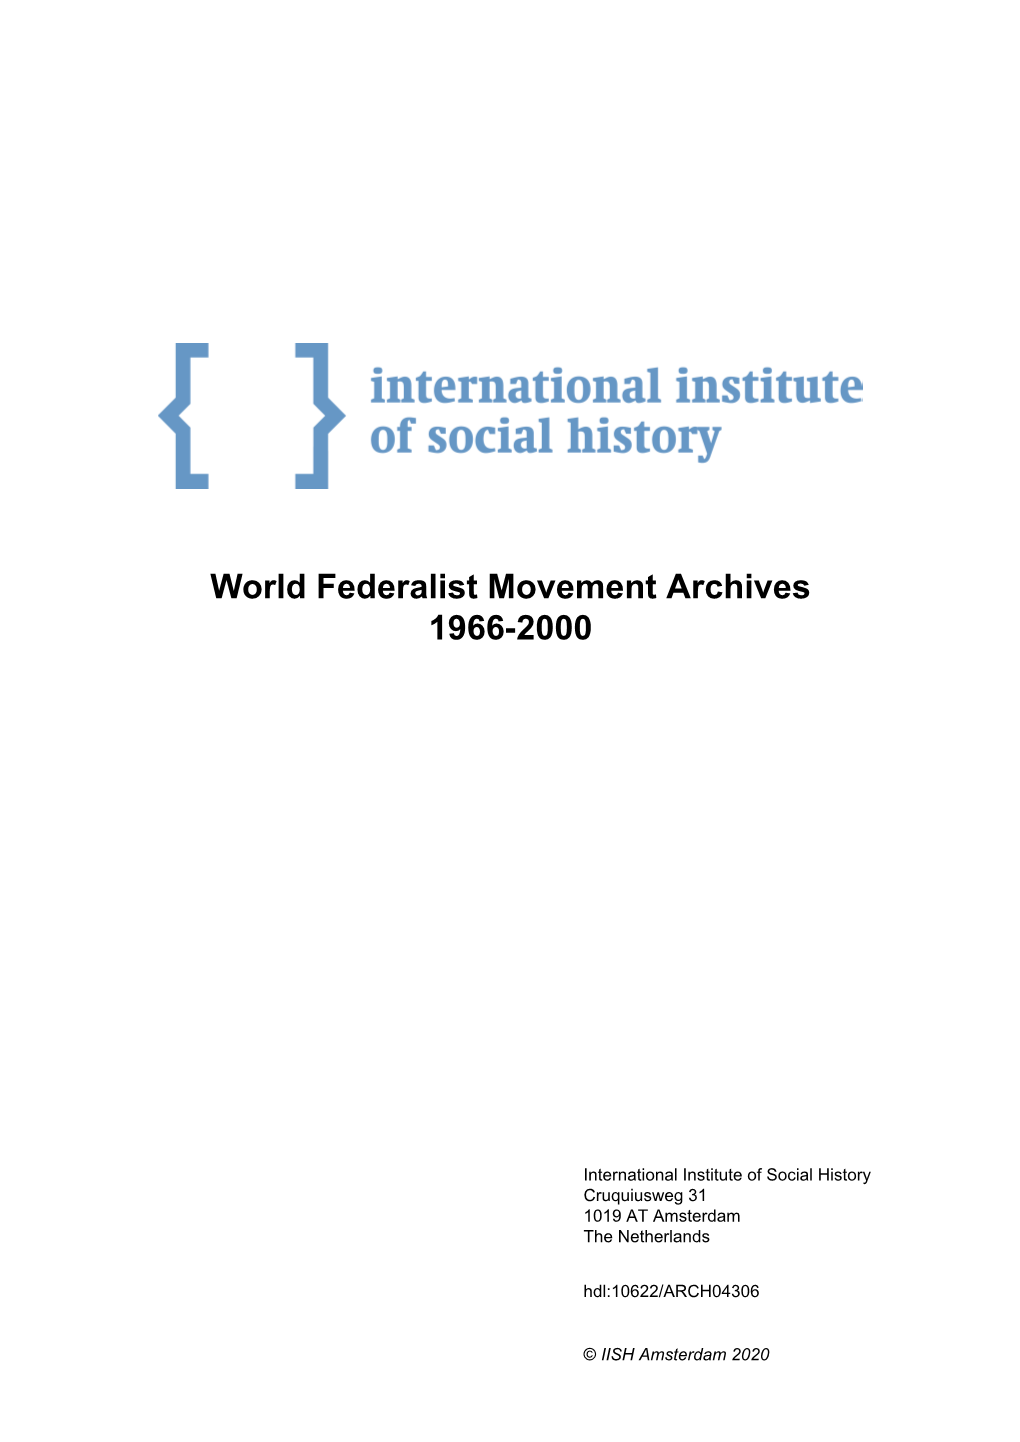 World Federalist Movement Archives 1966-2000